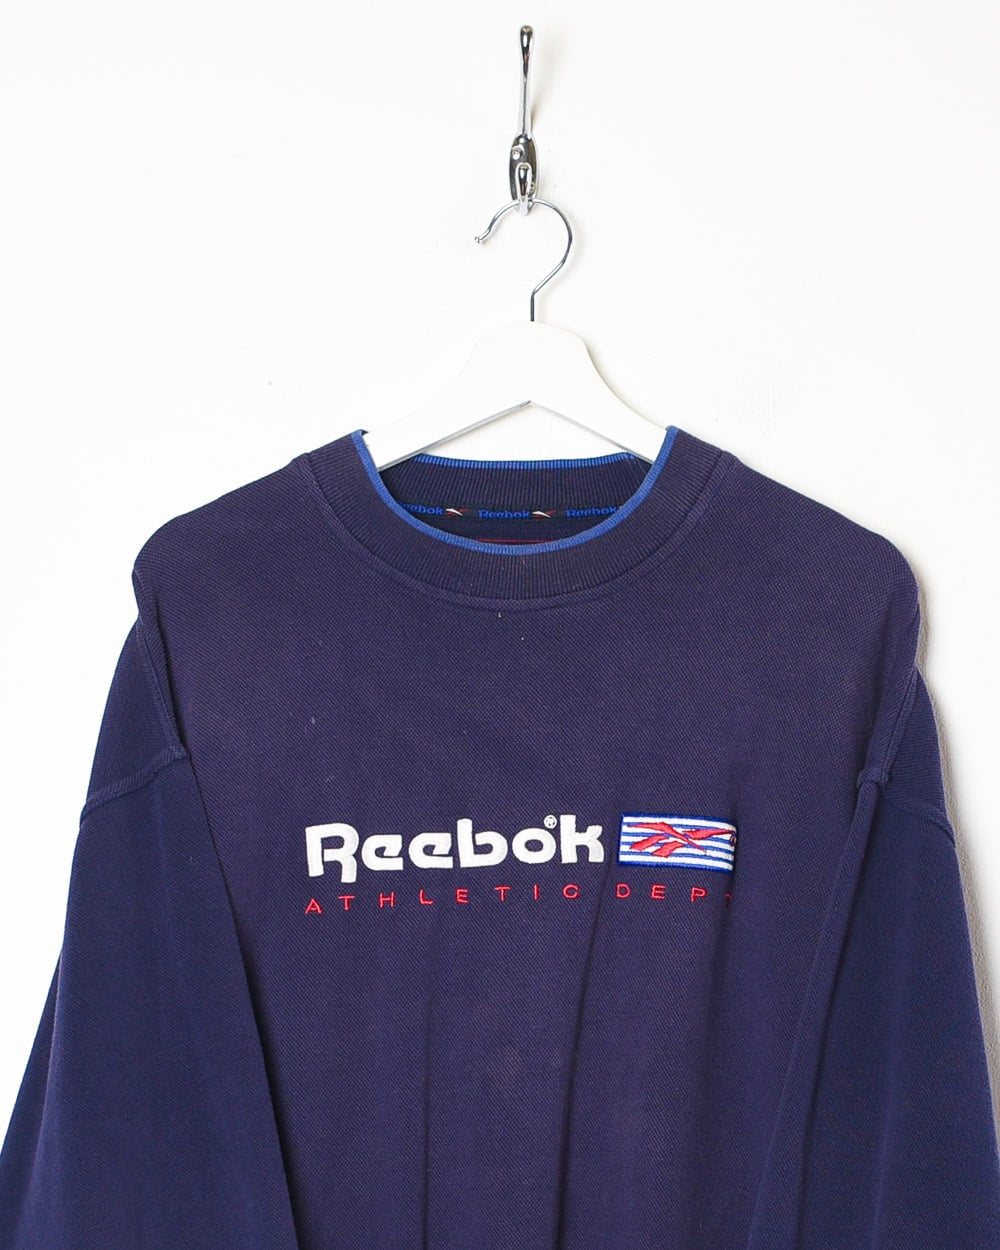 Navy Reebok Athletic Dept Sweatshirt - Medium